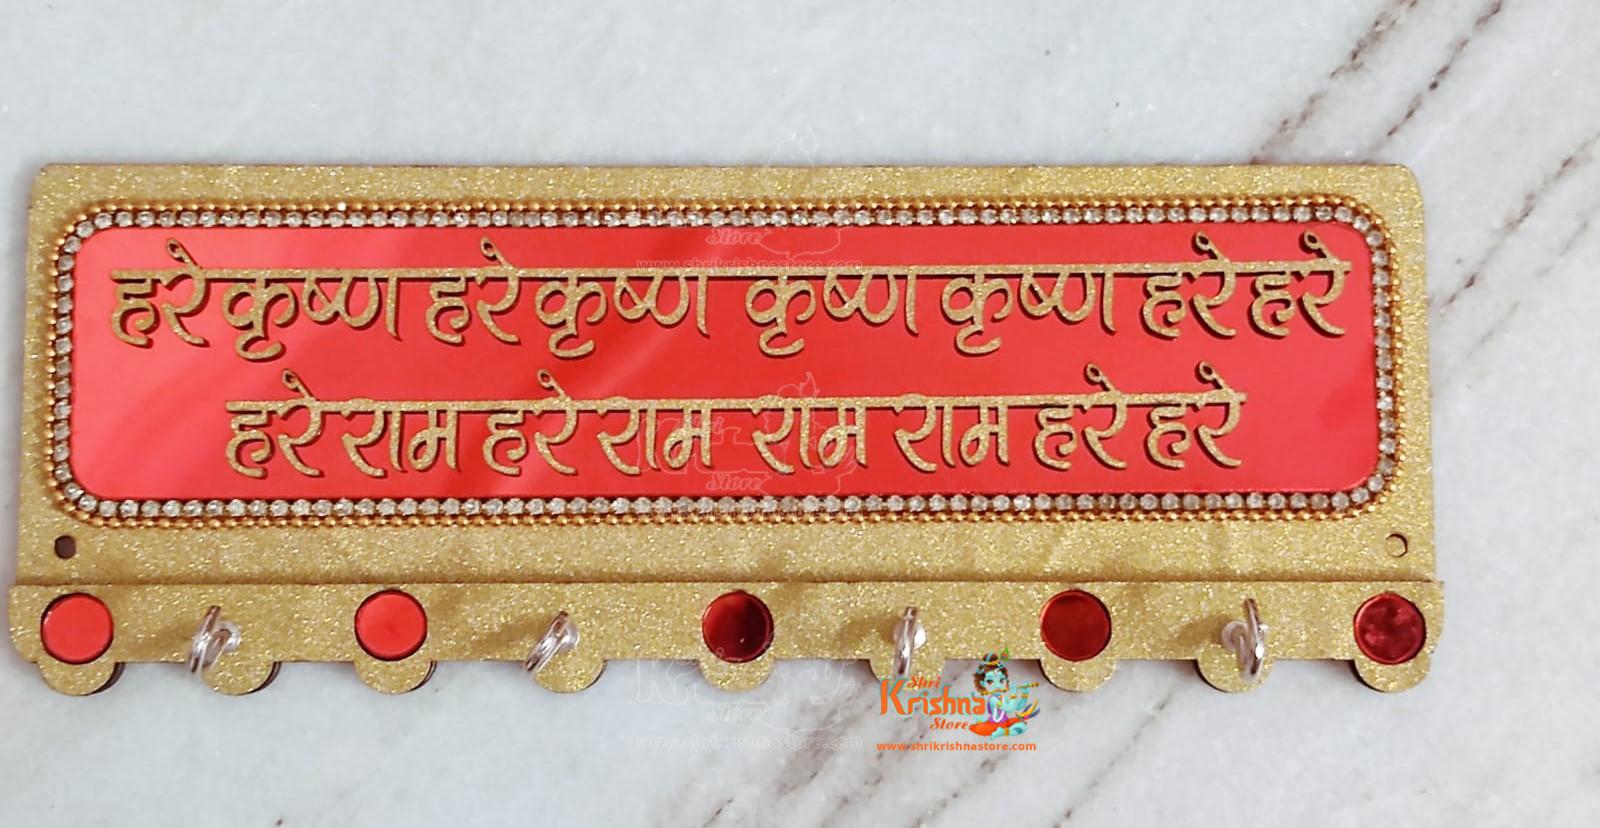 Hare Krishna Key chain holders with inscribed Mahamantra